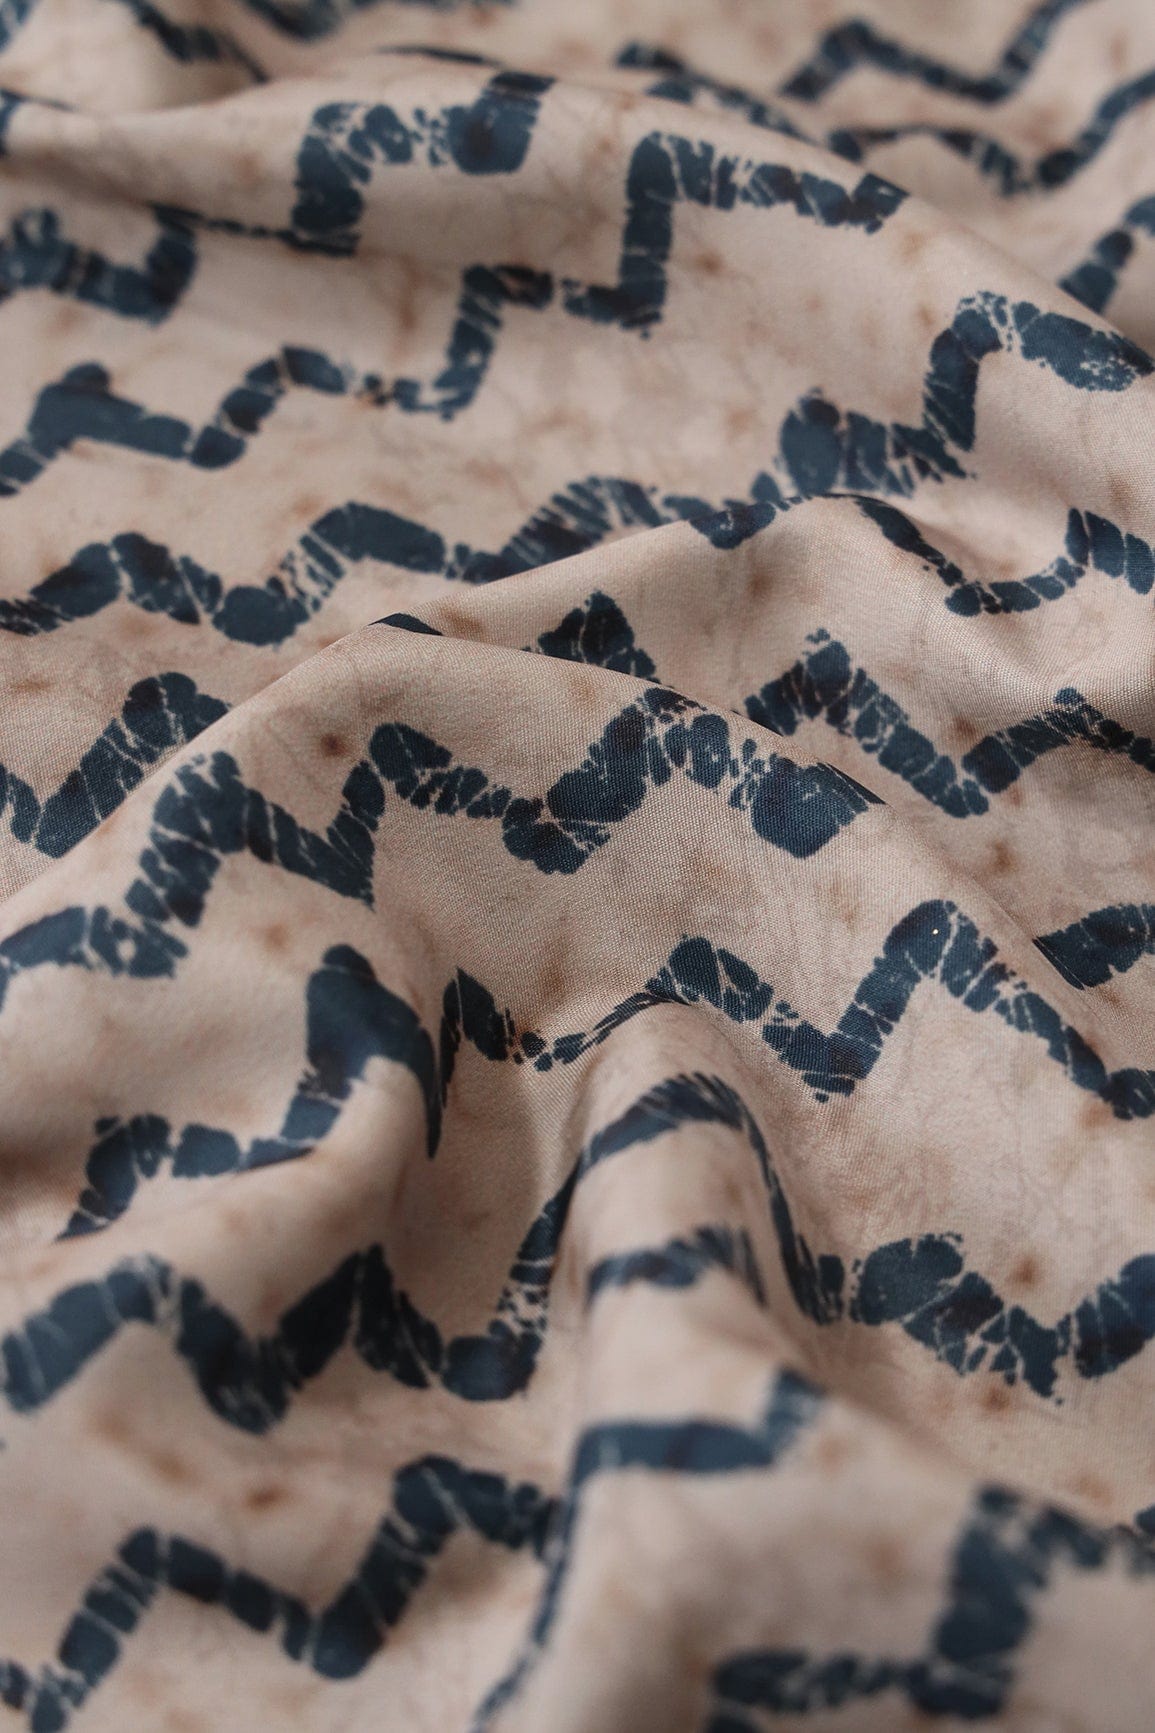 doeraa Prints khaki Beige And Prussian Blue Chevron Pattern Digital Print On French Crepe Fabric